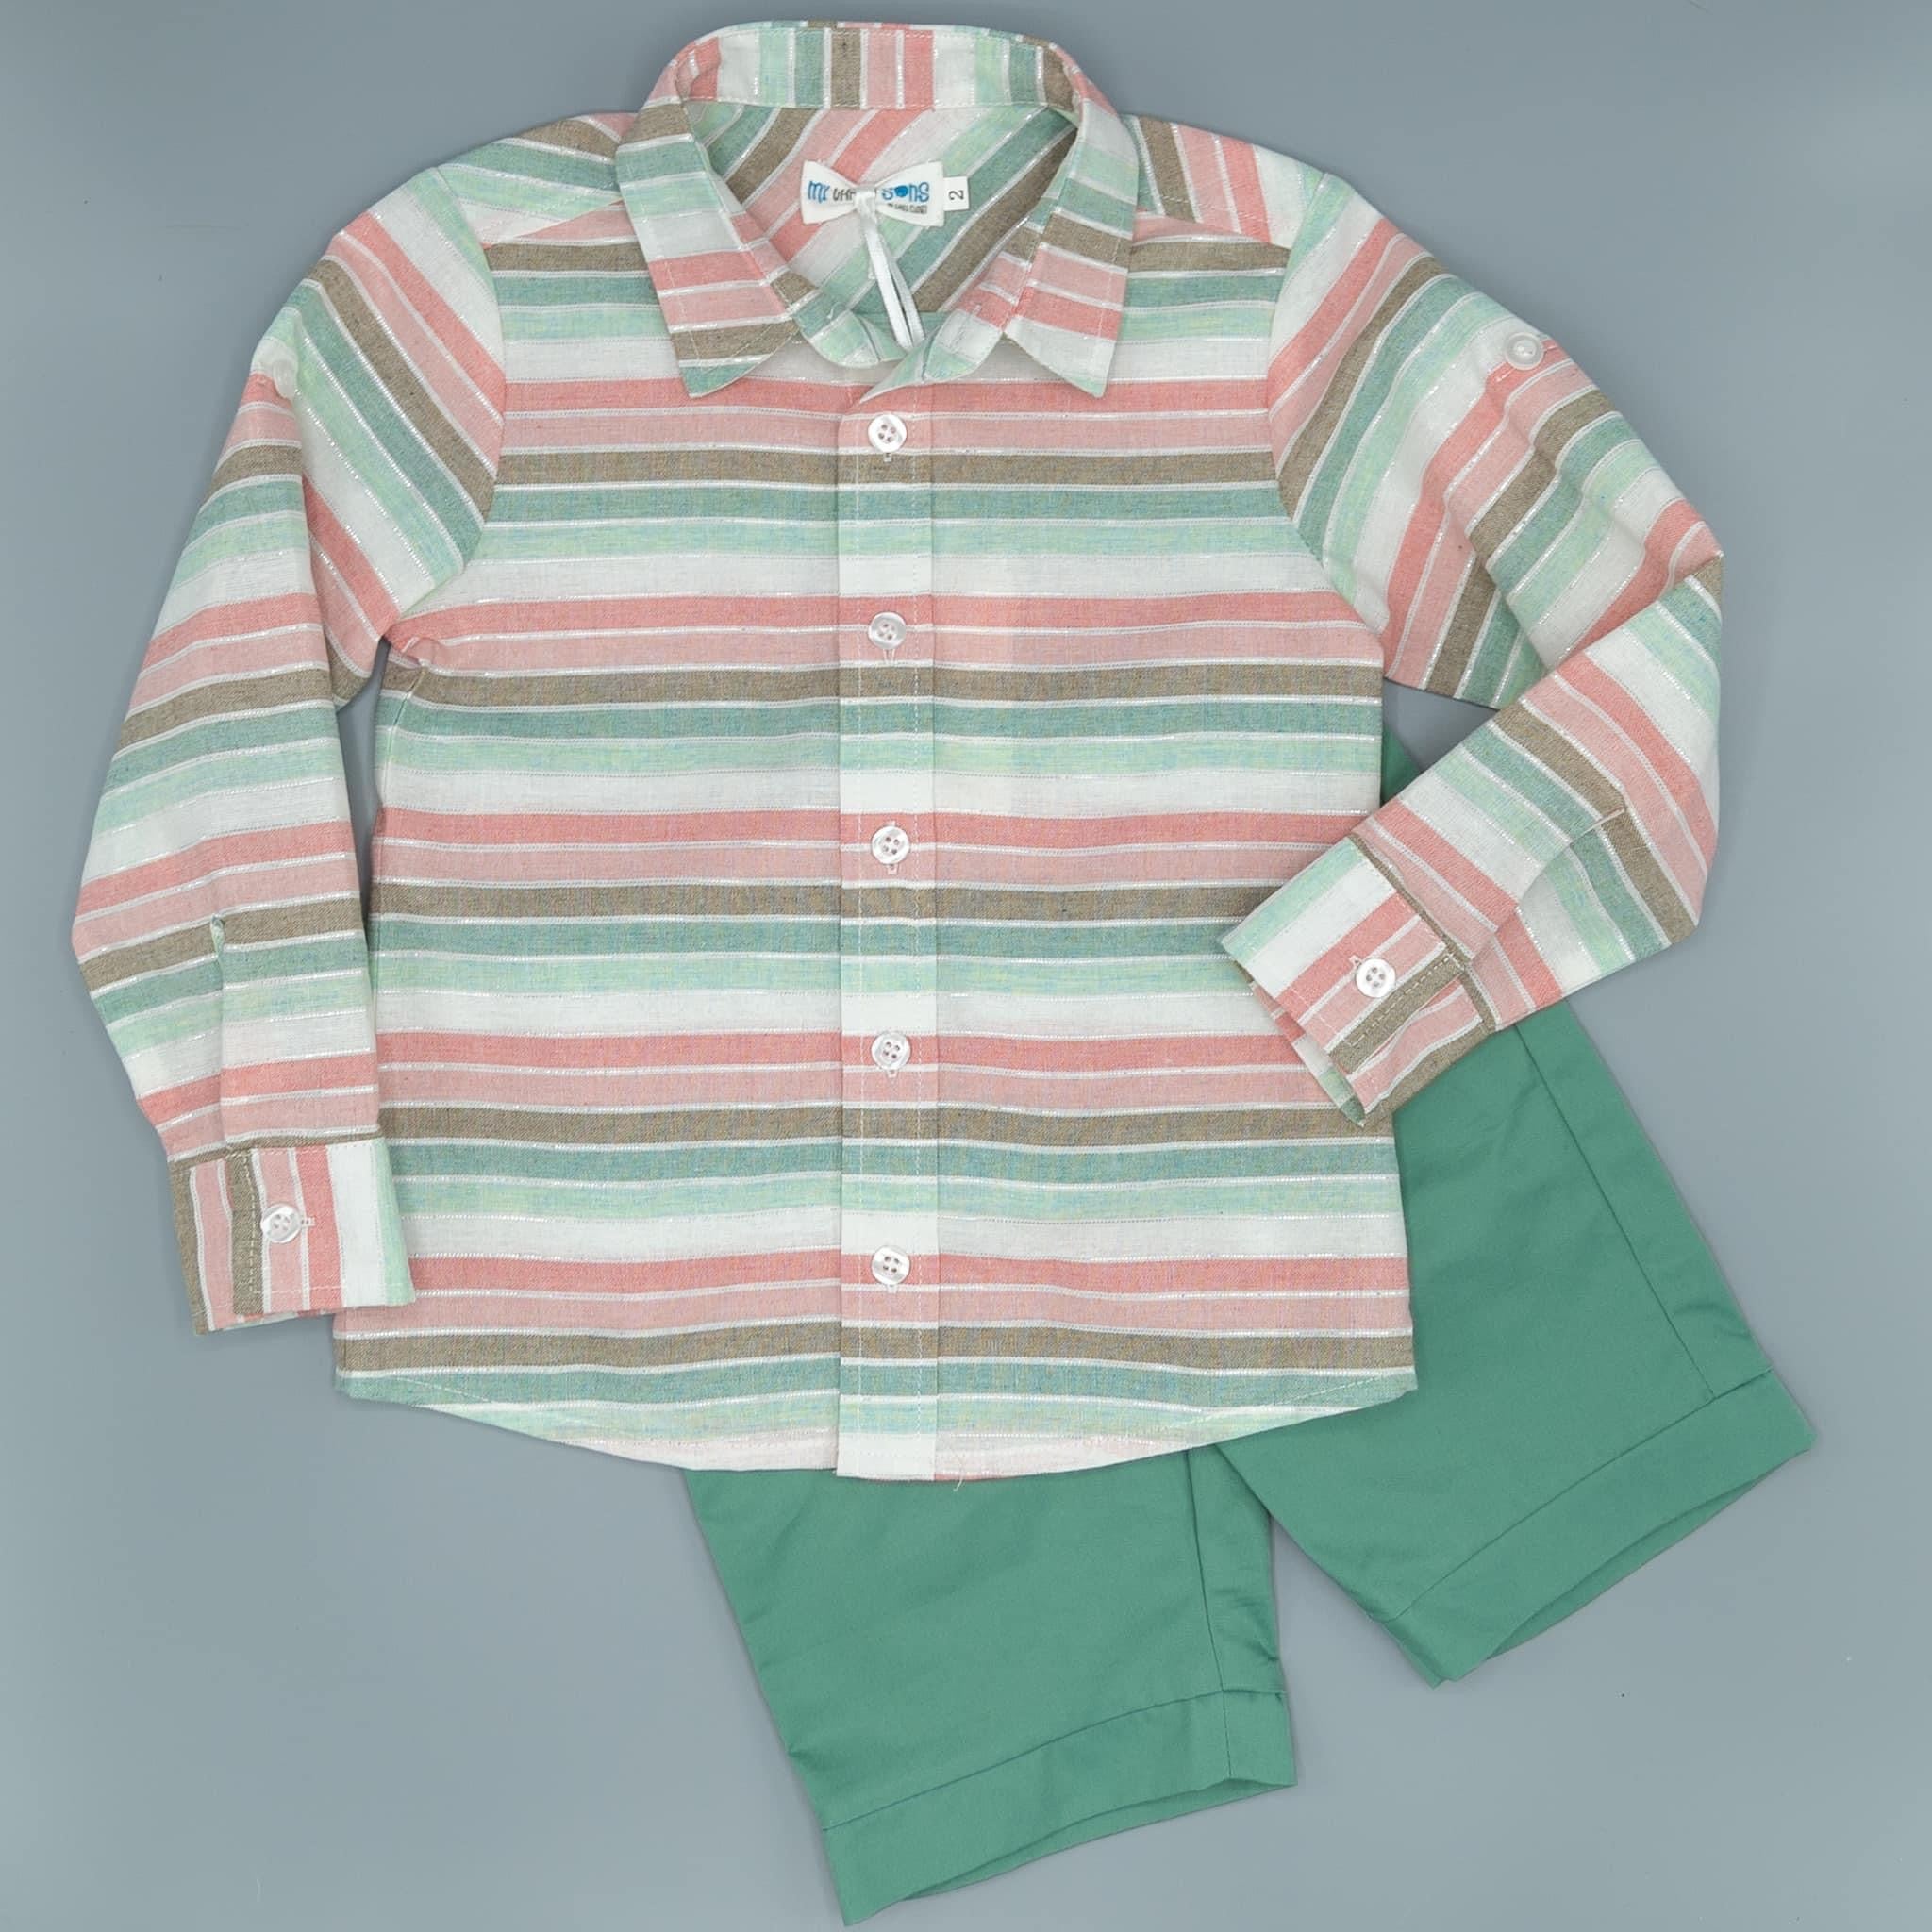 Sweet Watermelon Striped Boy's Shirt - Evie's Closet Clothing